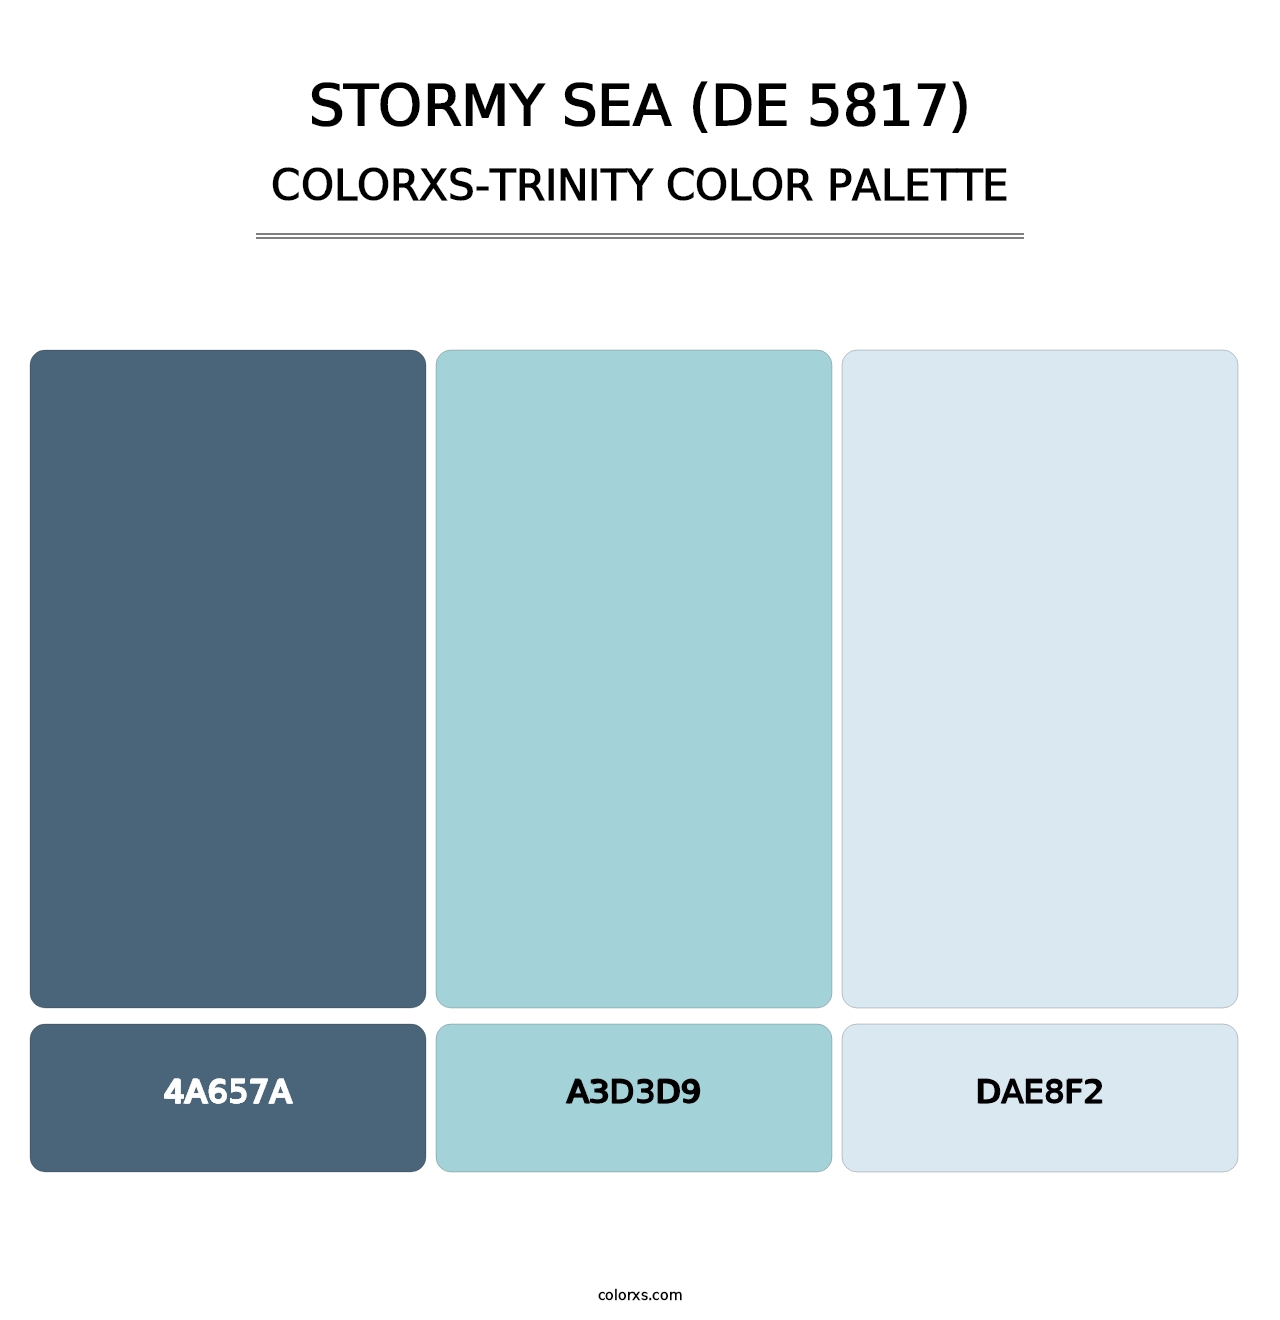 Stormy Sea (DE 5817) - Colorxs Trinity Palette